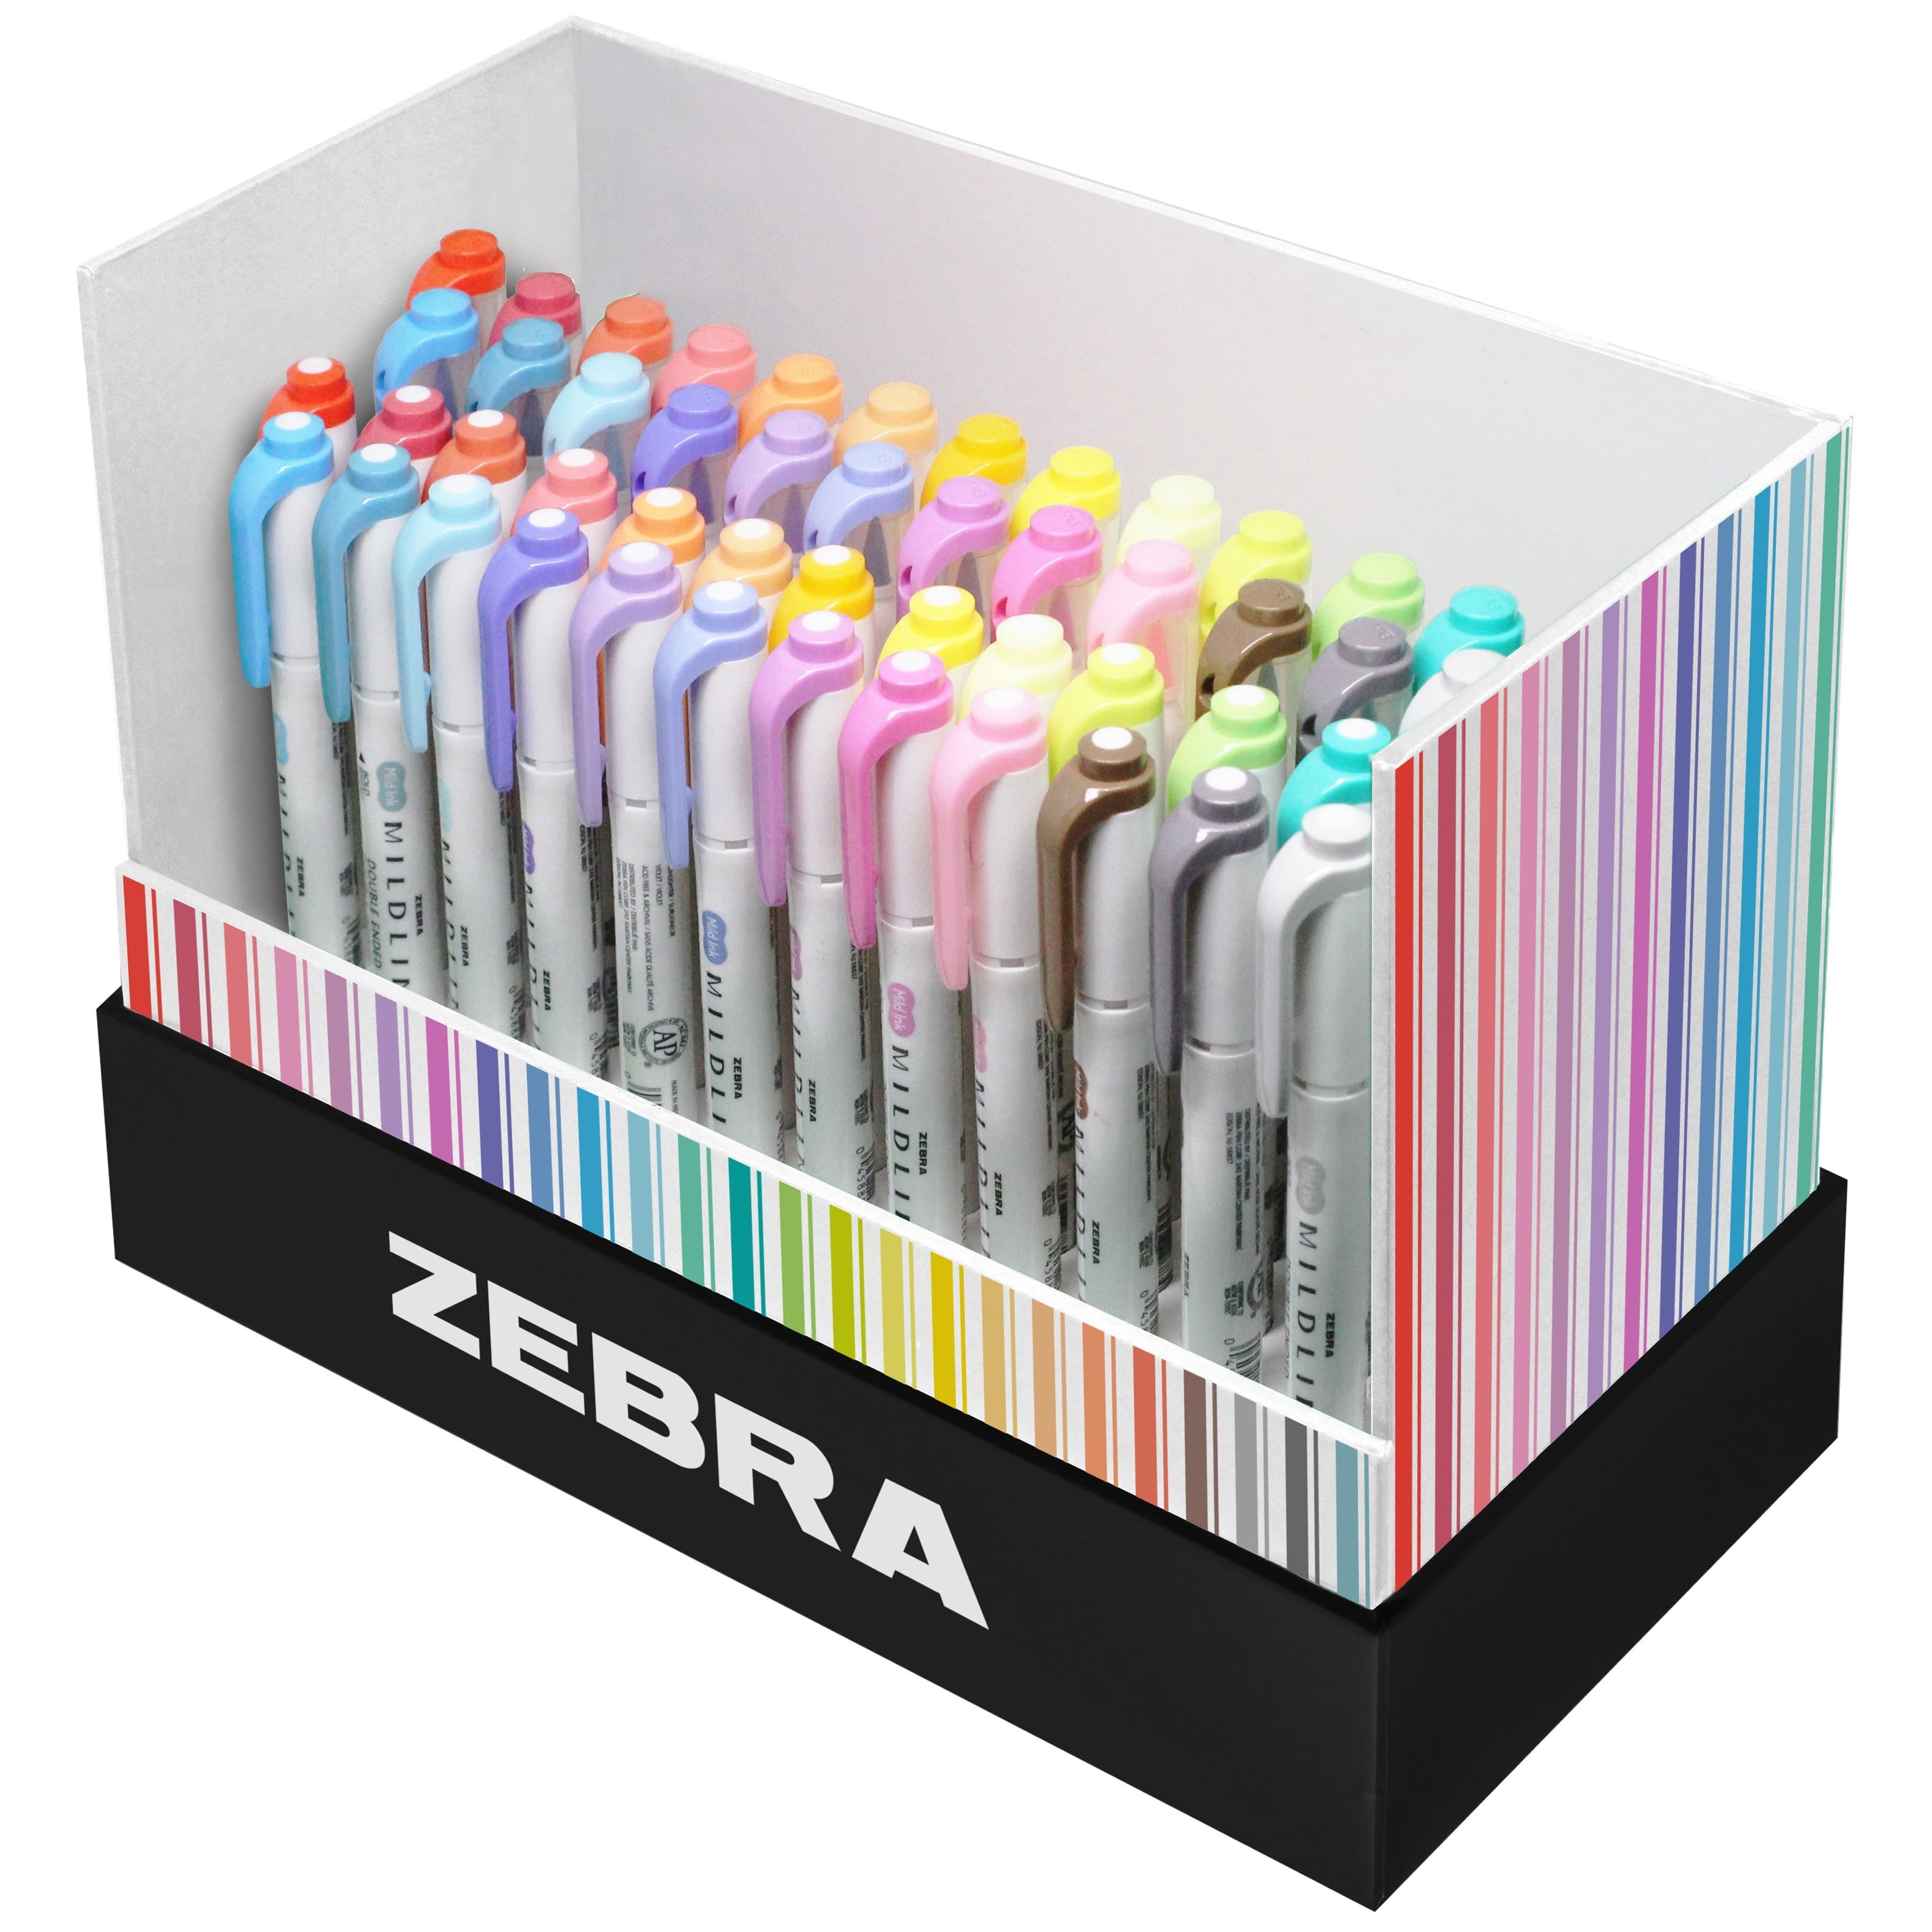 ZEBRA - Mildliner - Single Marker - Japanese Stationery Range – TACTO STUDIO